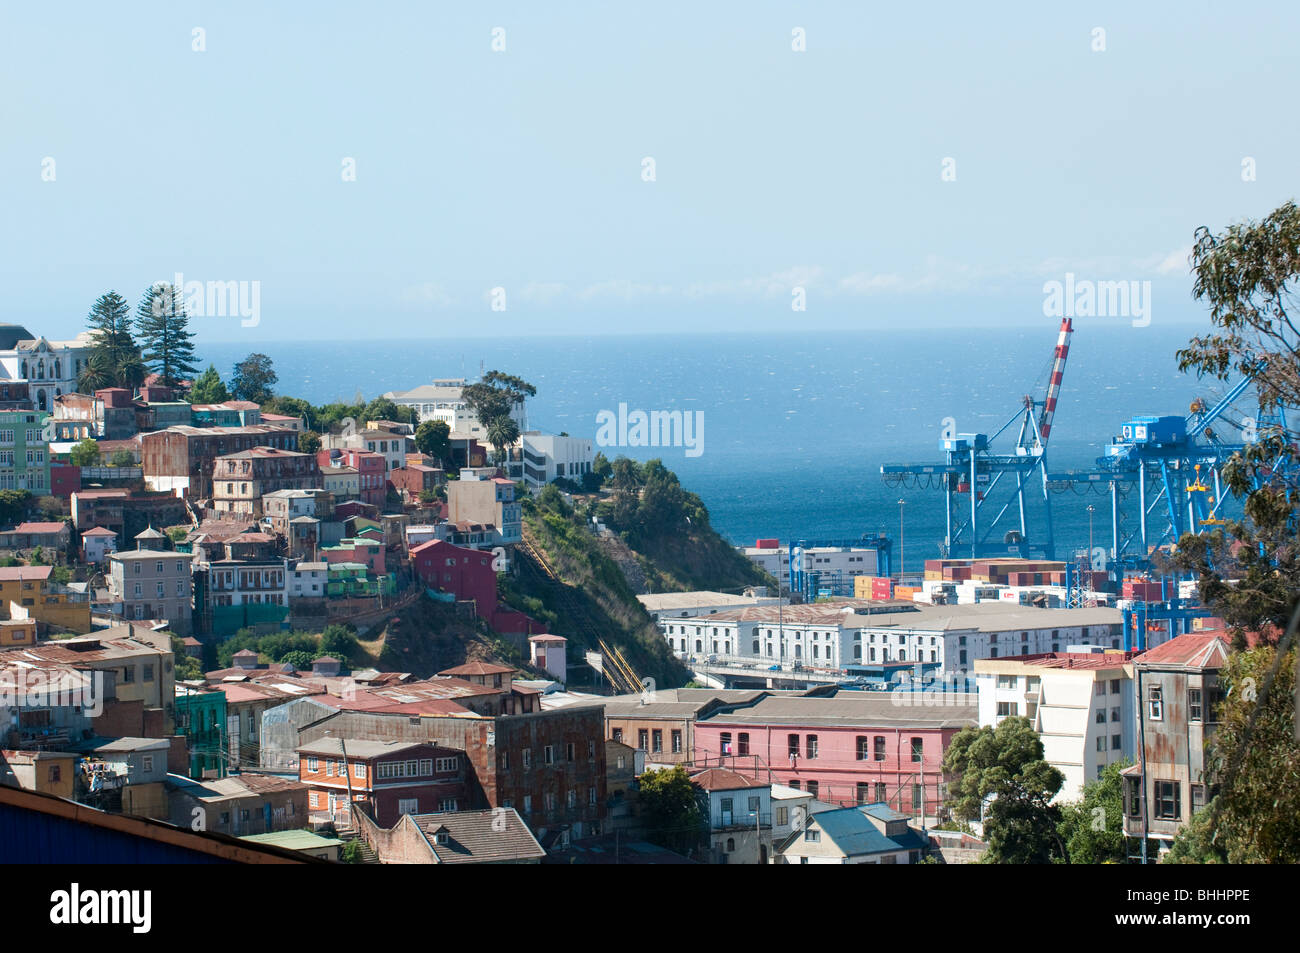 Chile's Port City of Valparaiso Stock Photo - Alamy